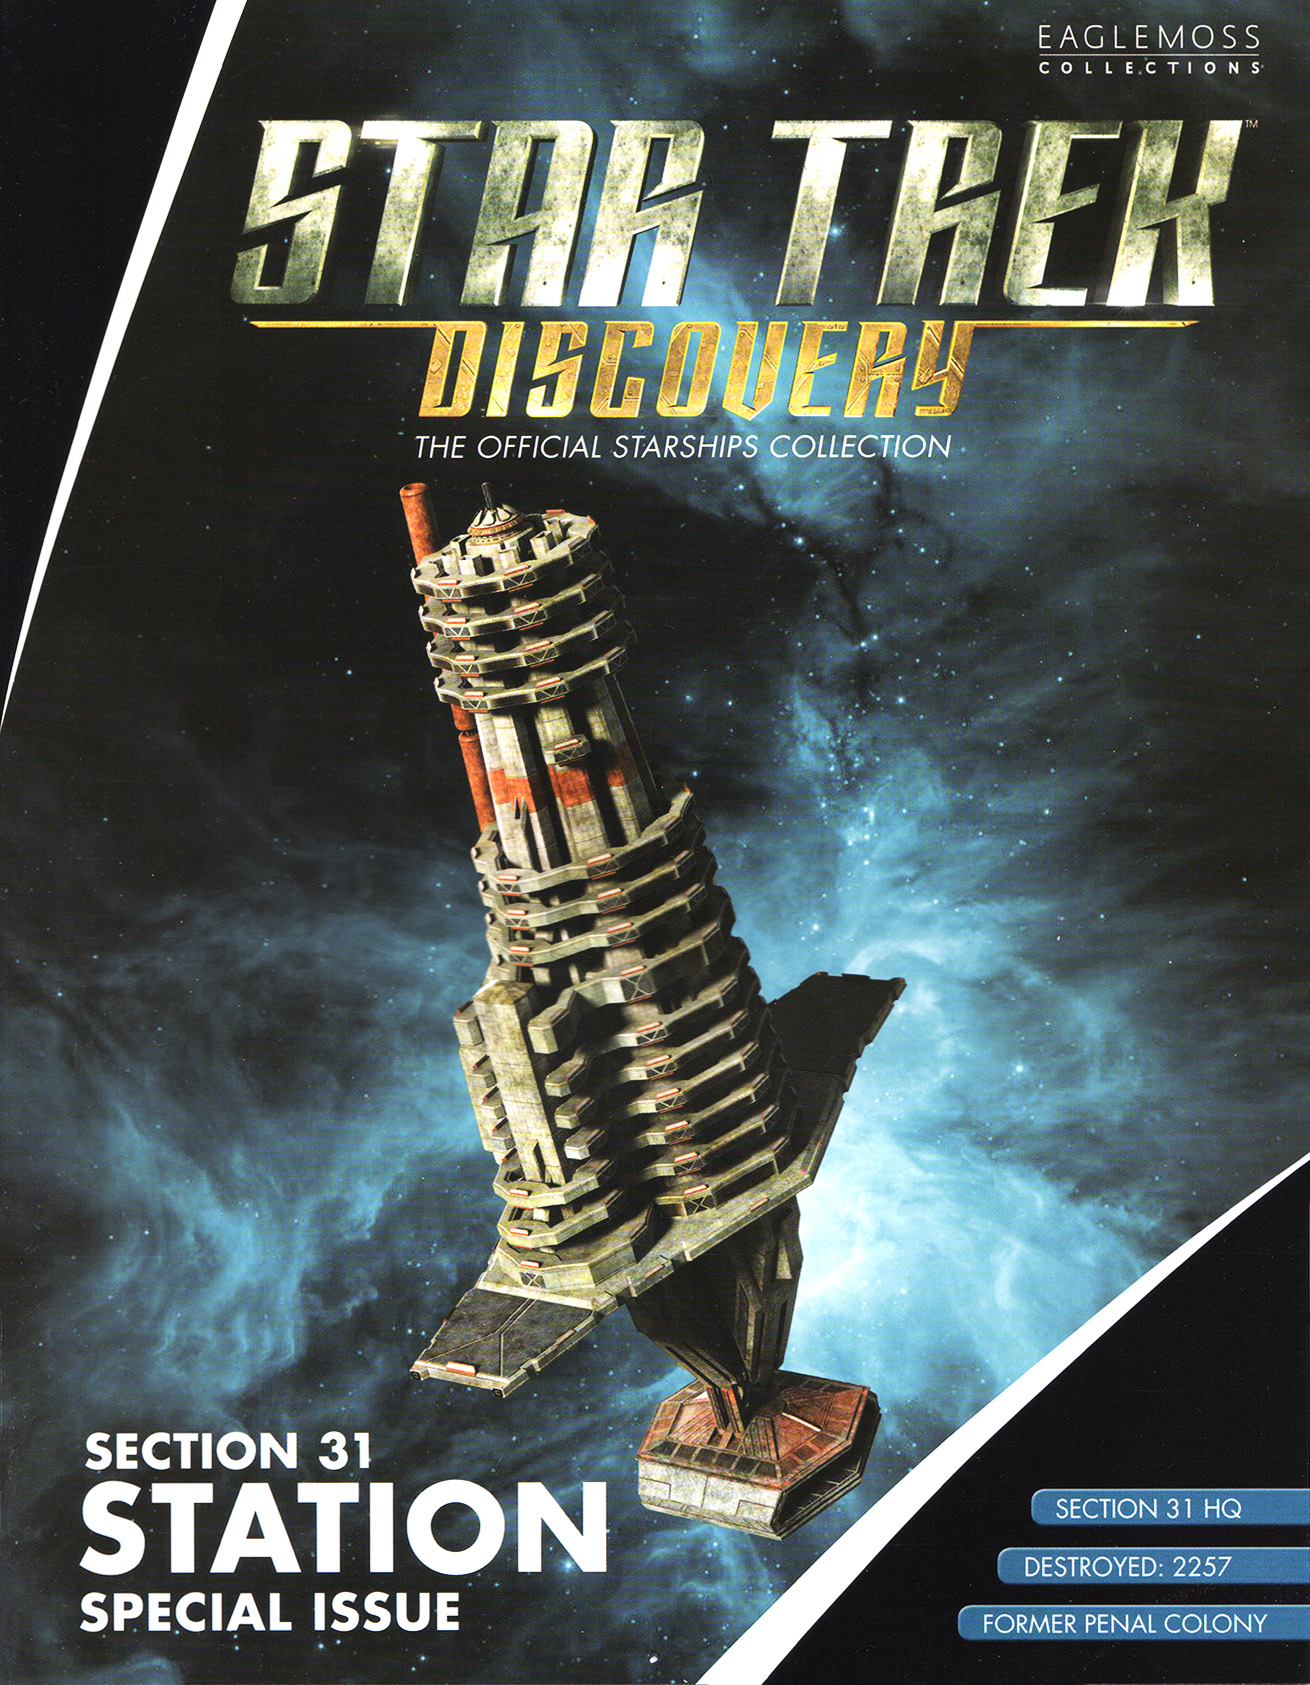 Eaglemoss Star Trek Starships Discovery Issue Special 3